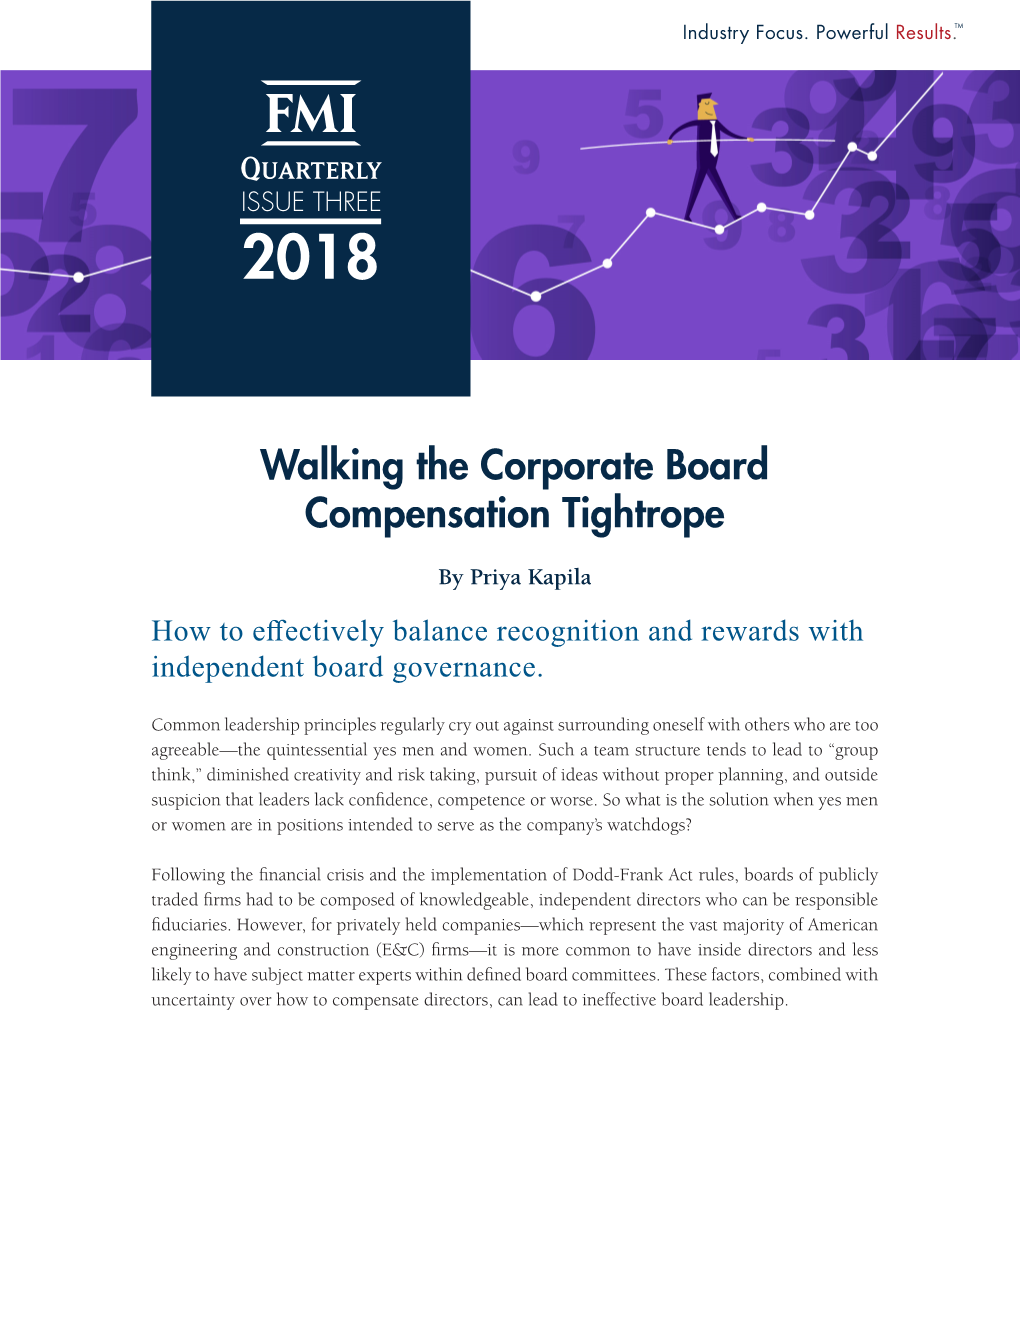 Walking the Corporate Board Compensation Tightrope